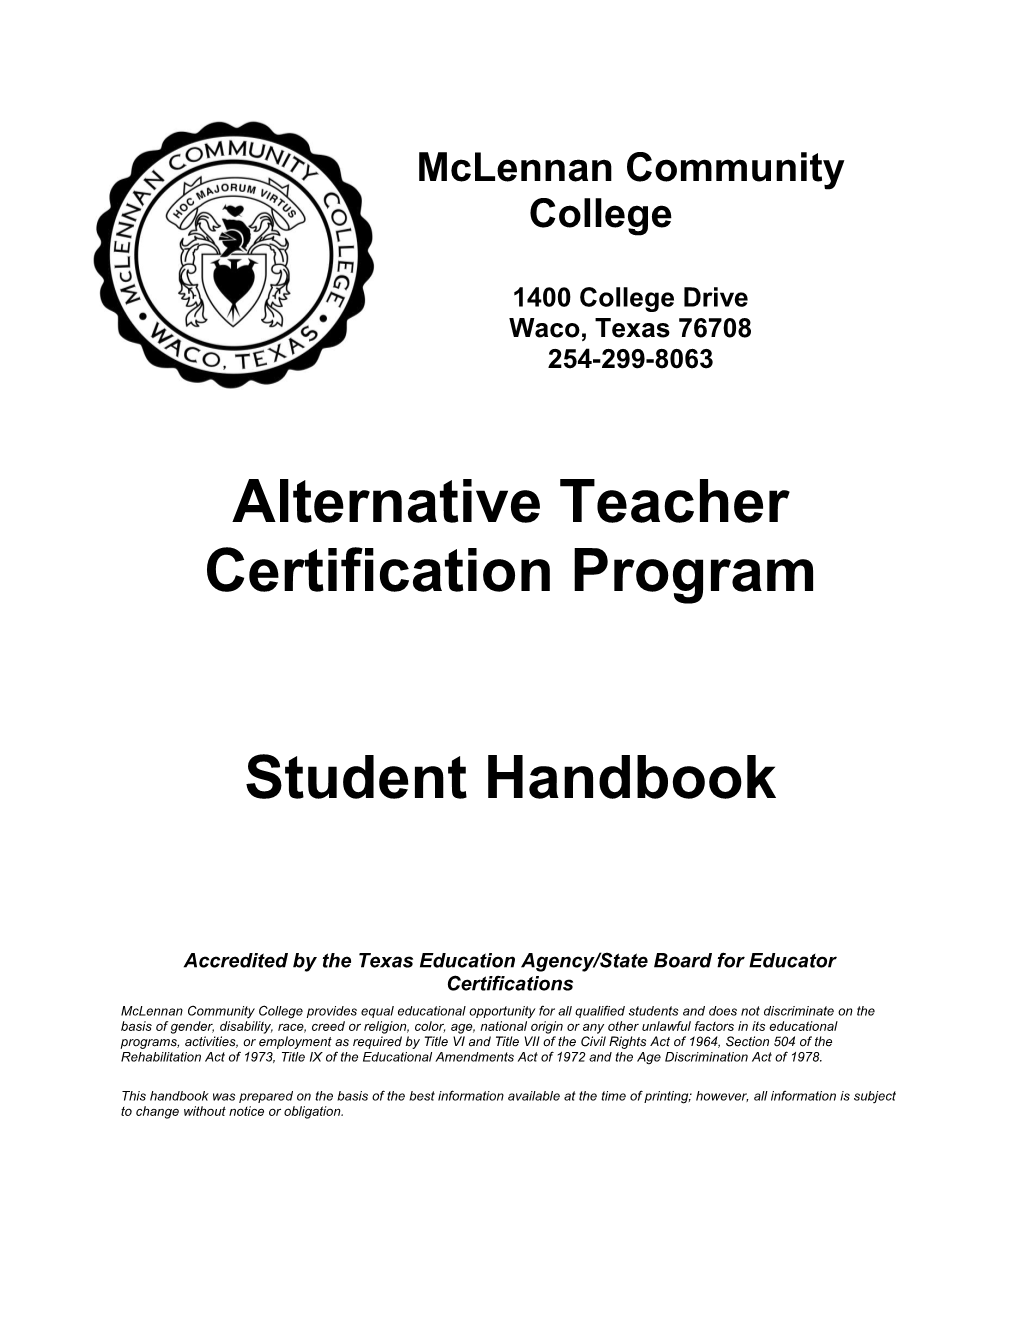 Alternative Teacher Certification